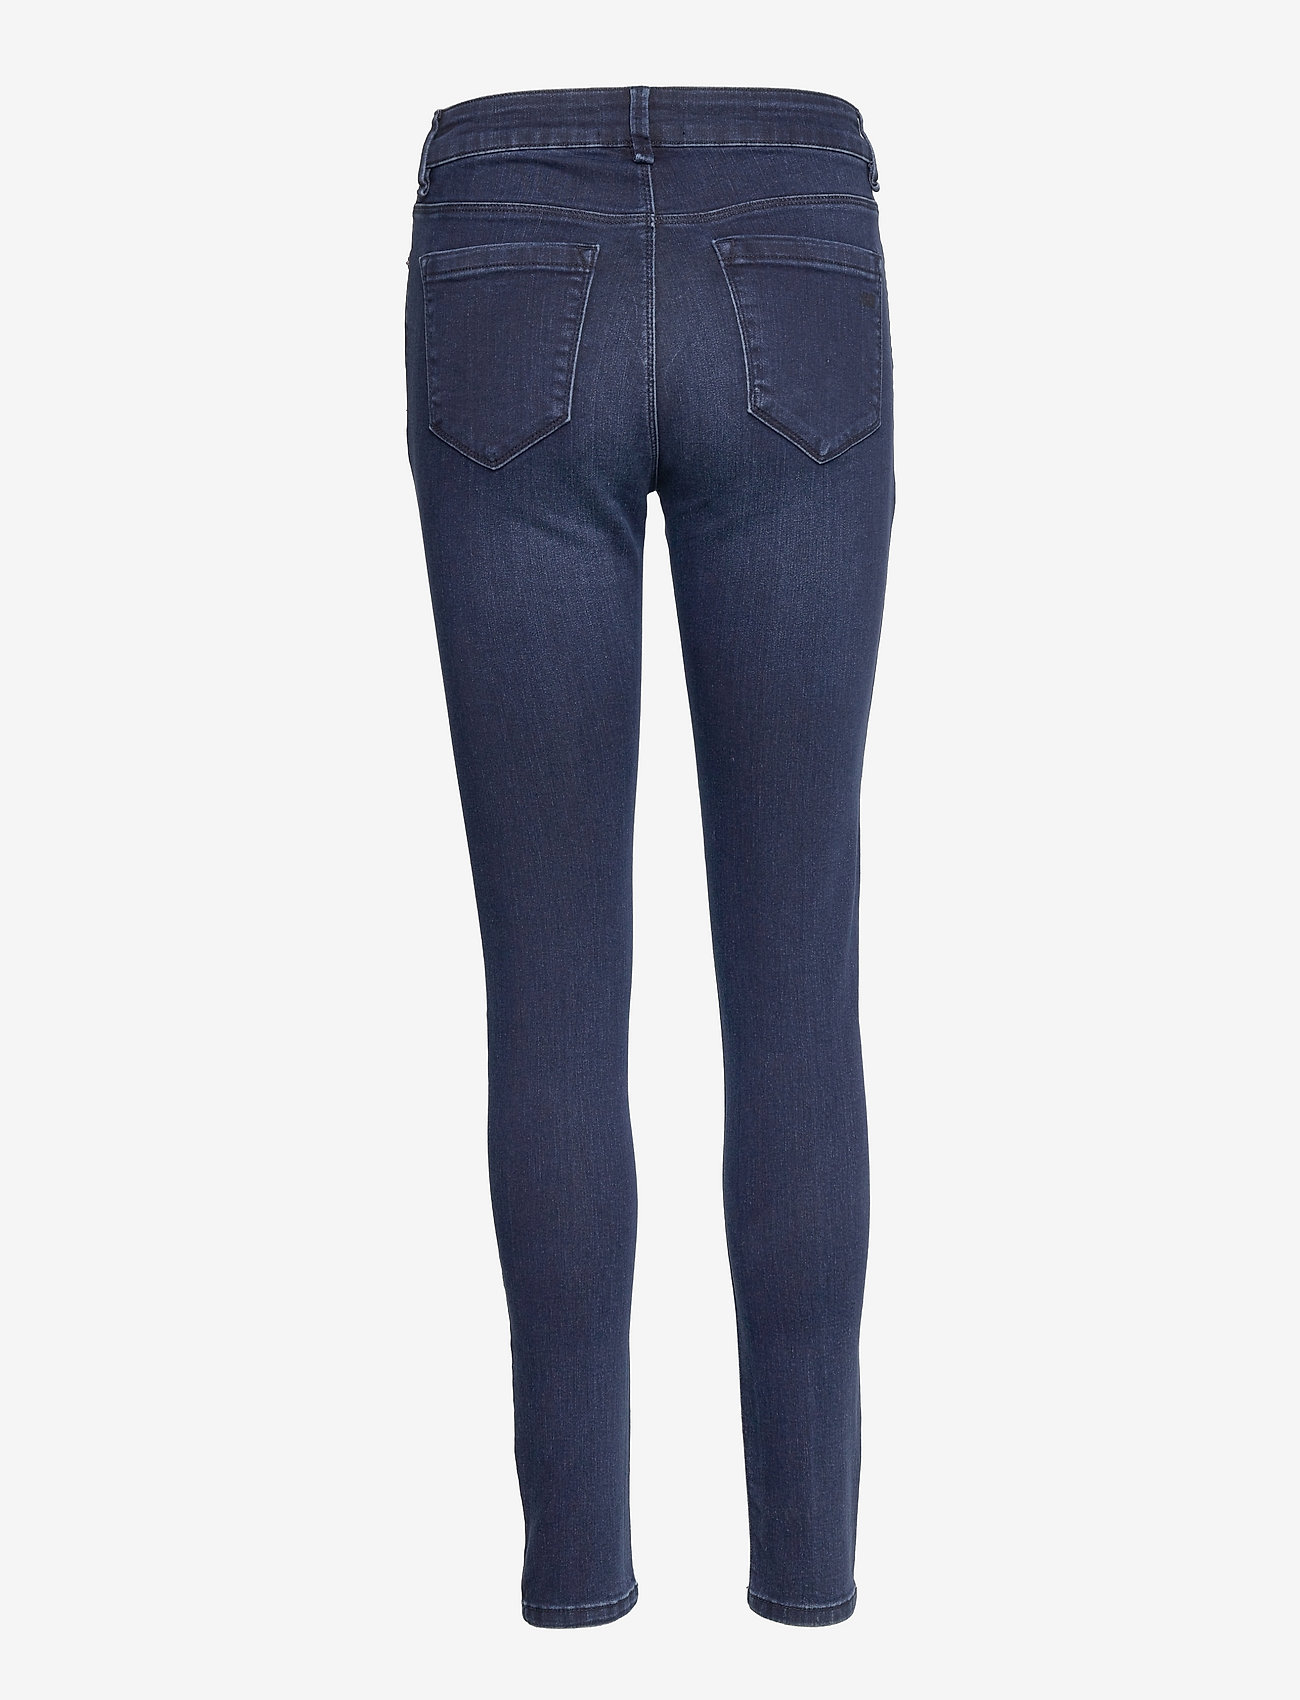 IVY Copenhagen - IVY-Alexa Jeans Cool Midnight Blue - skinny jeans - denim blue - 1